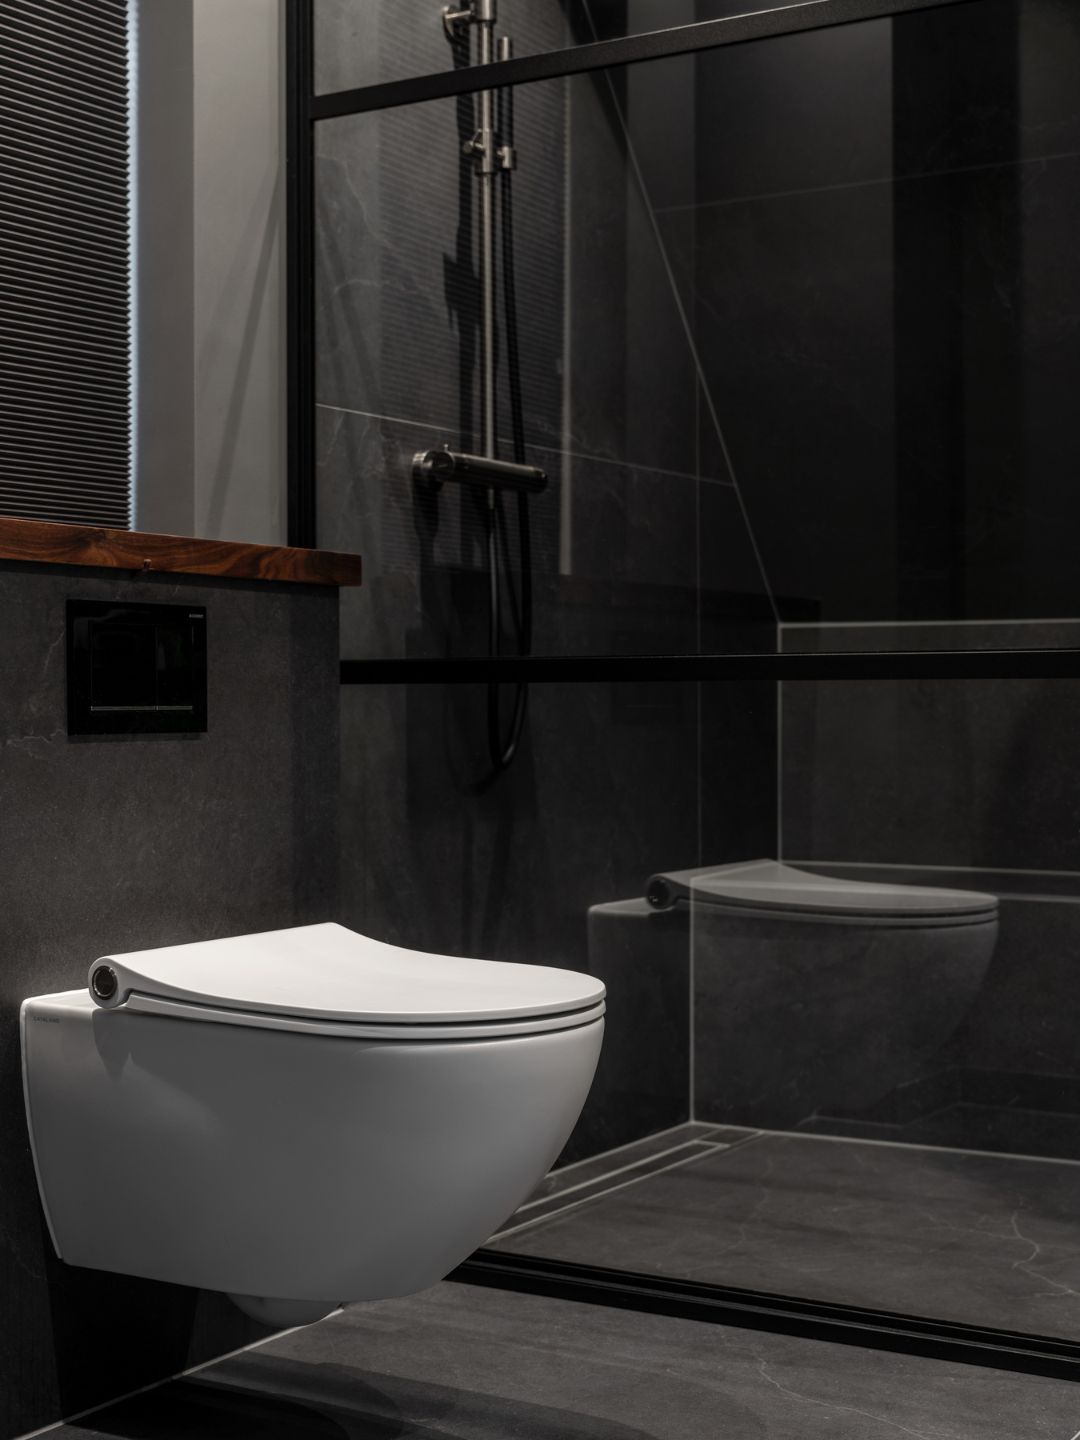 Foto: luxe badkamer toilet